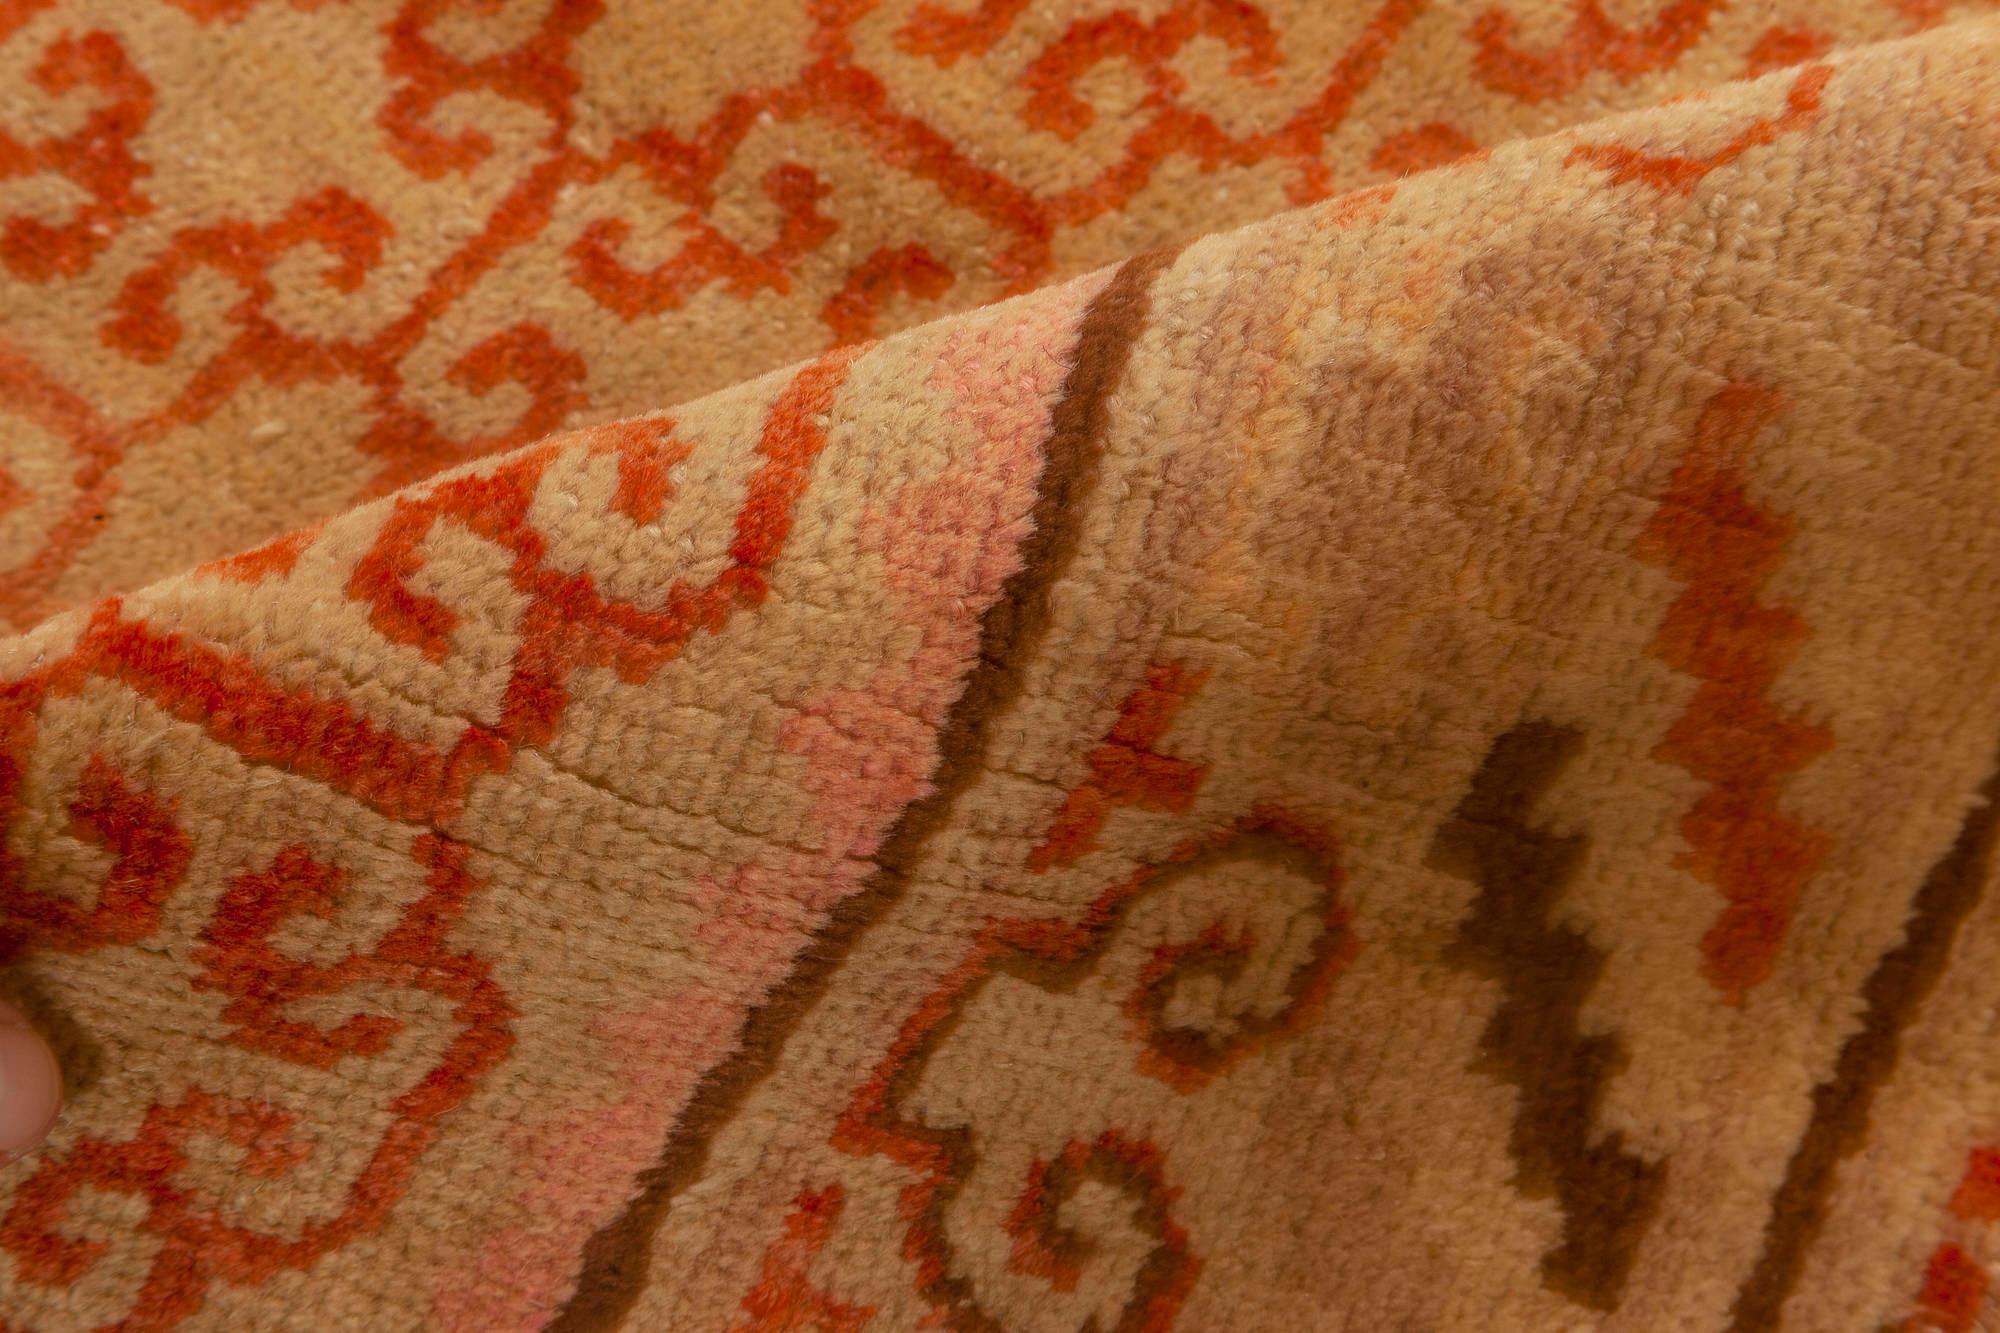 Midcentury Samarkand handmade wool rug in sandy beige, orange and brown.
Size: 3'9